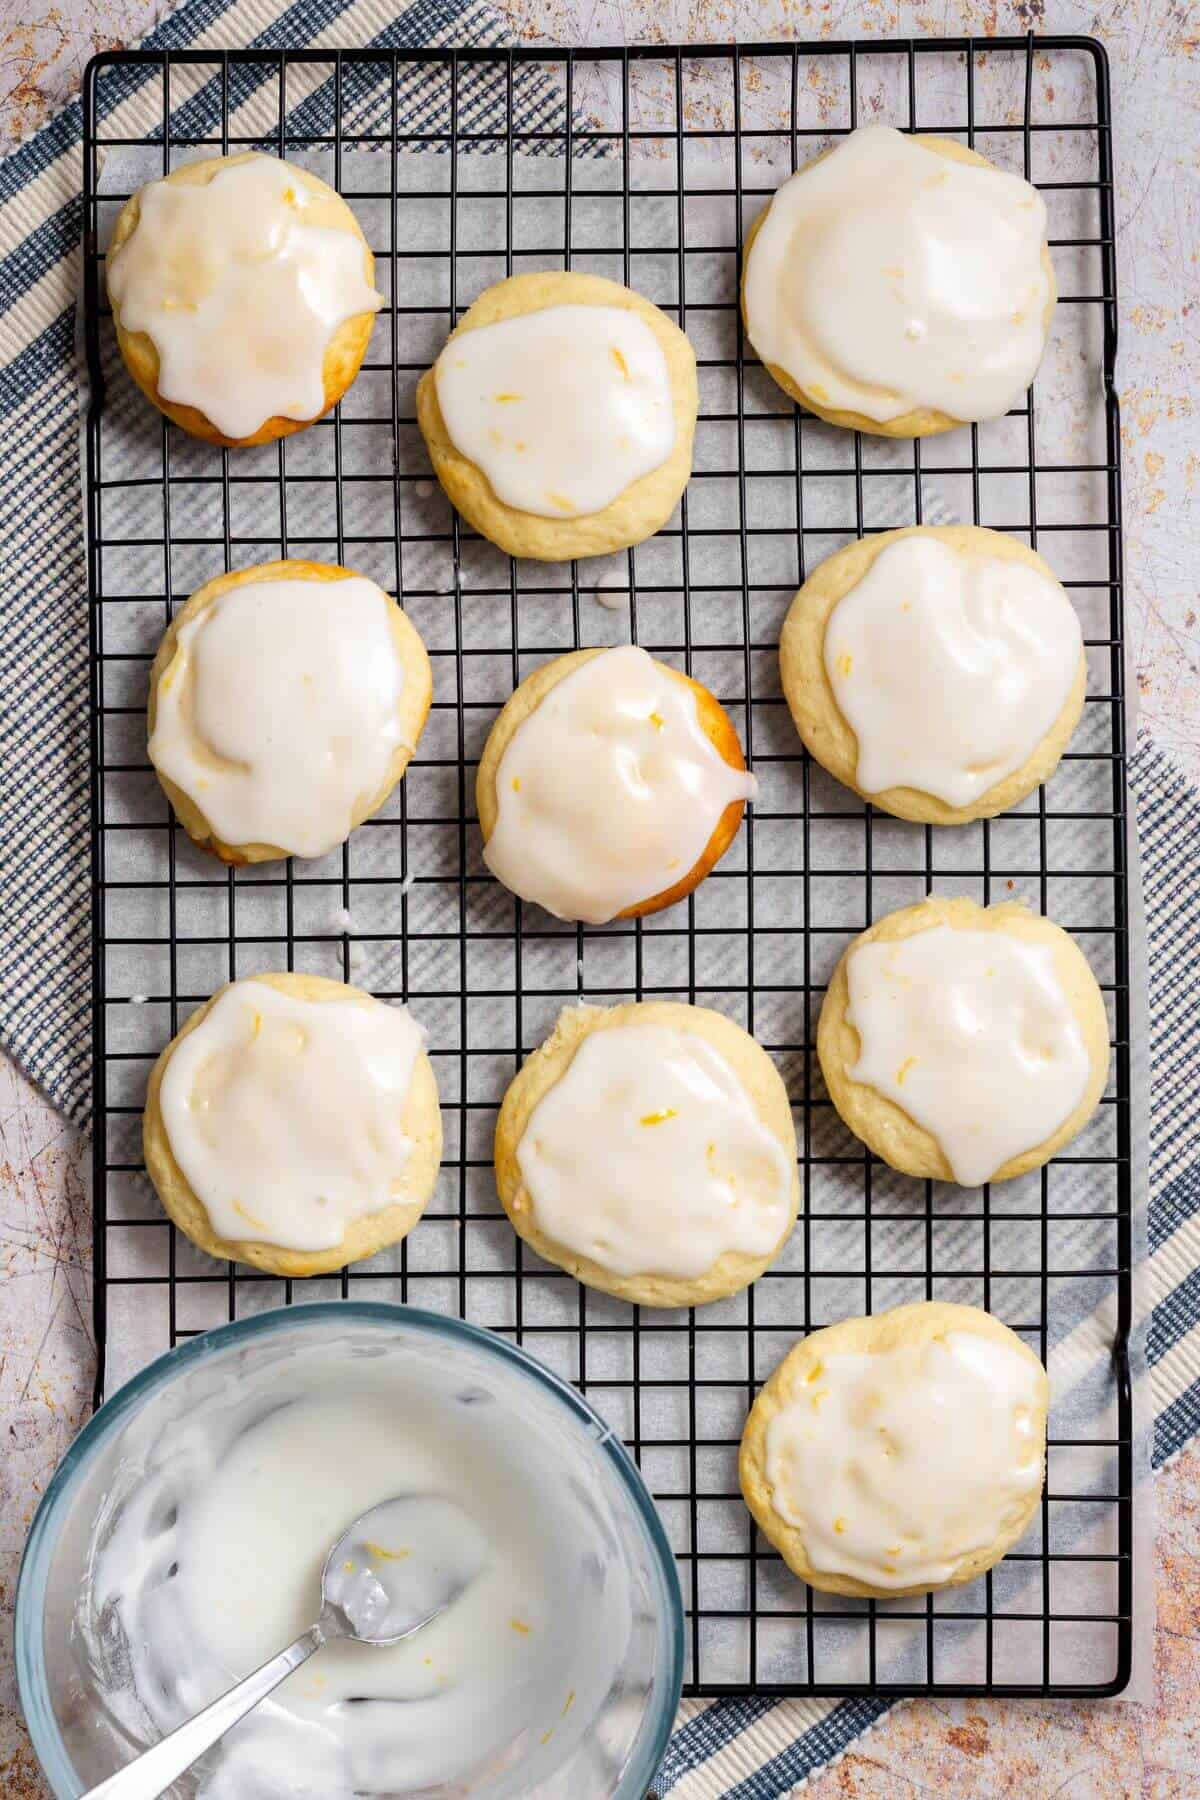 Cookies iced with lemon glaze.